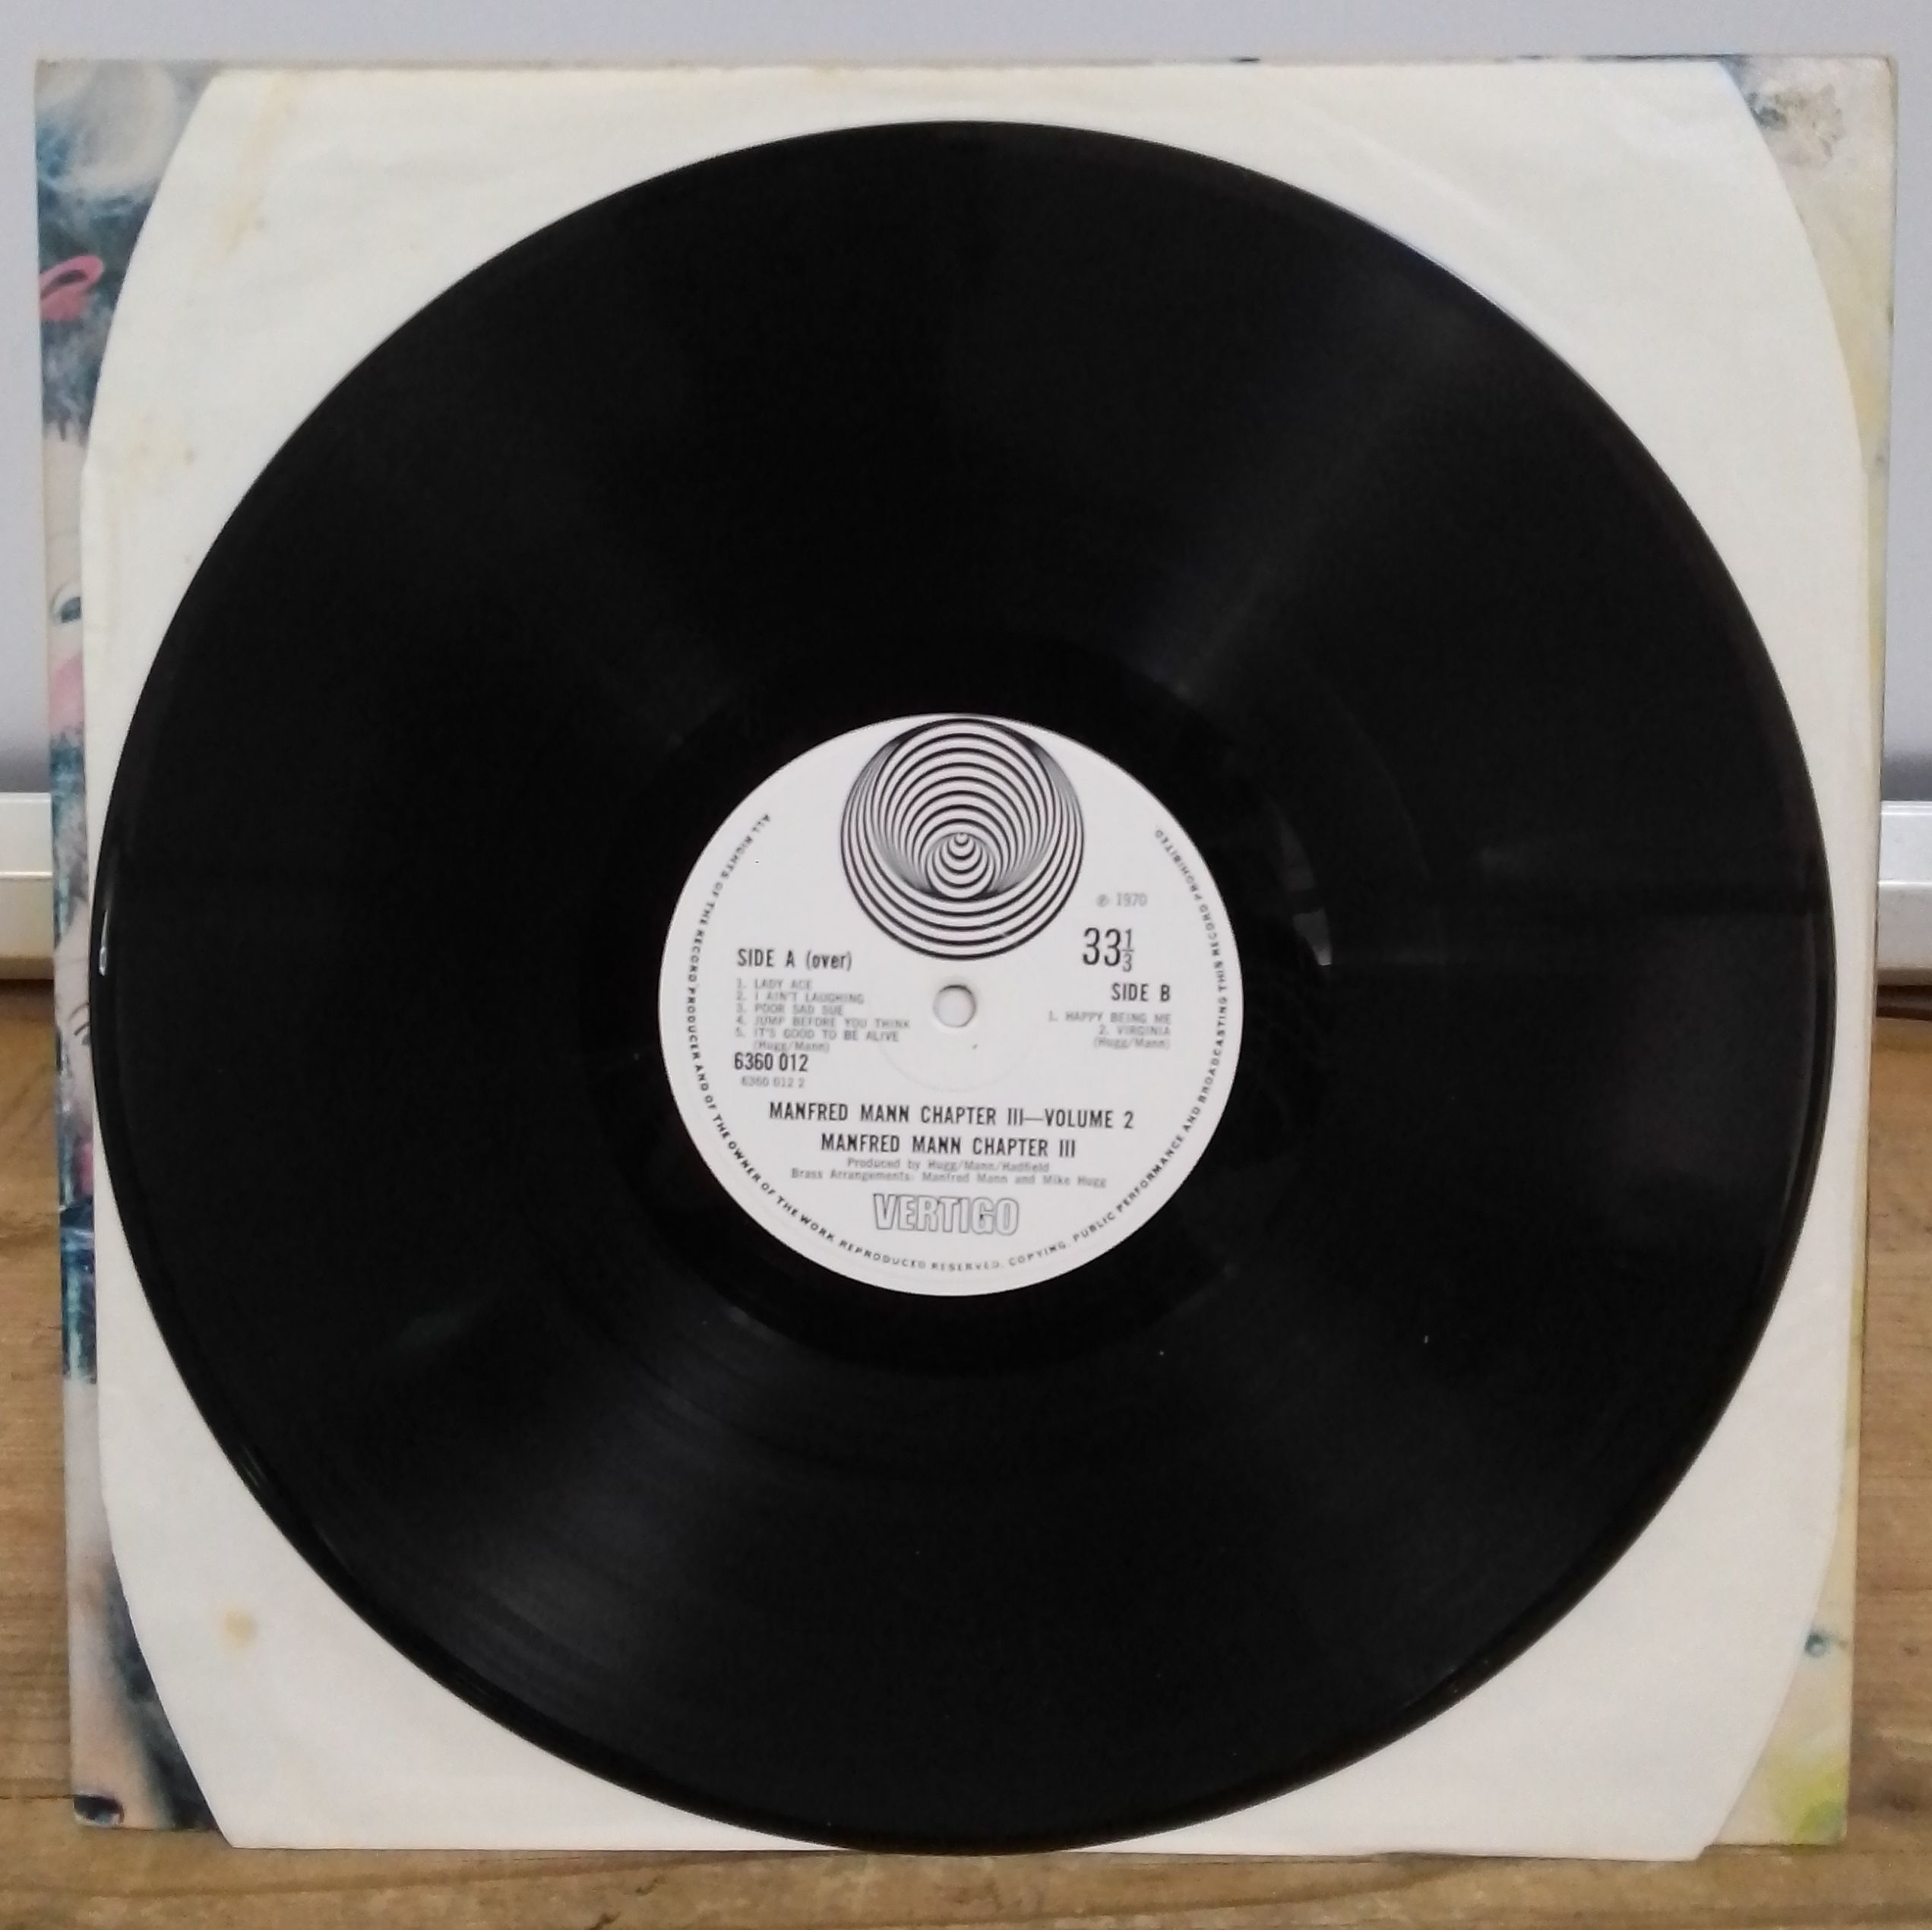 Manfred Mann - Chapter Three Volume Two, gatefold stereo LP, 1st pressing, UK 1970, Vertigo 6360 012 - Bild 4 aus 5